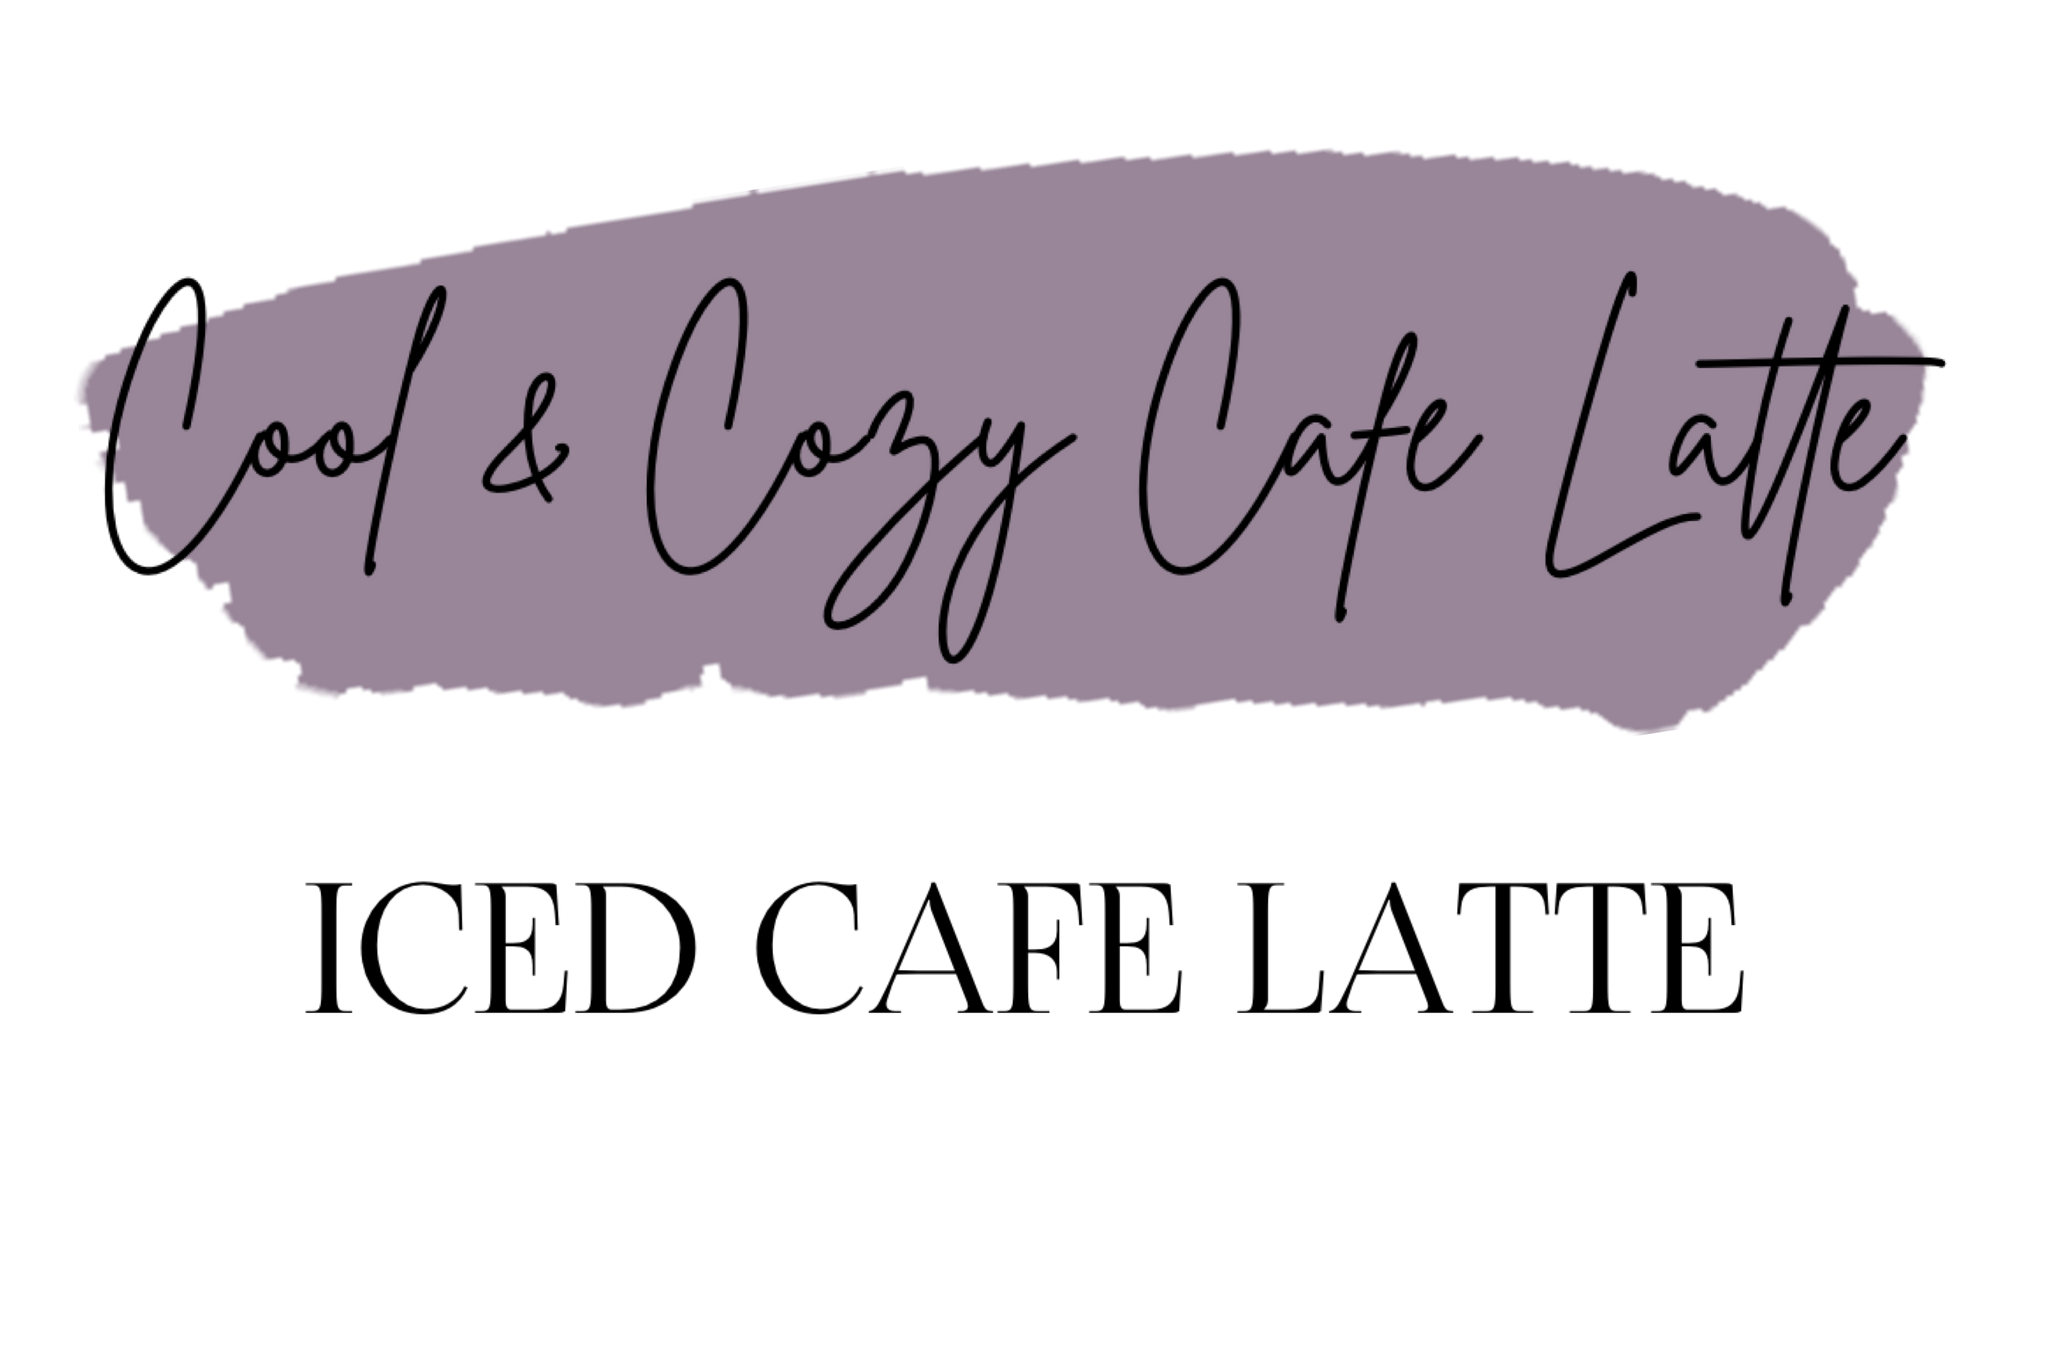 Cool & Cozy Cafe Latte